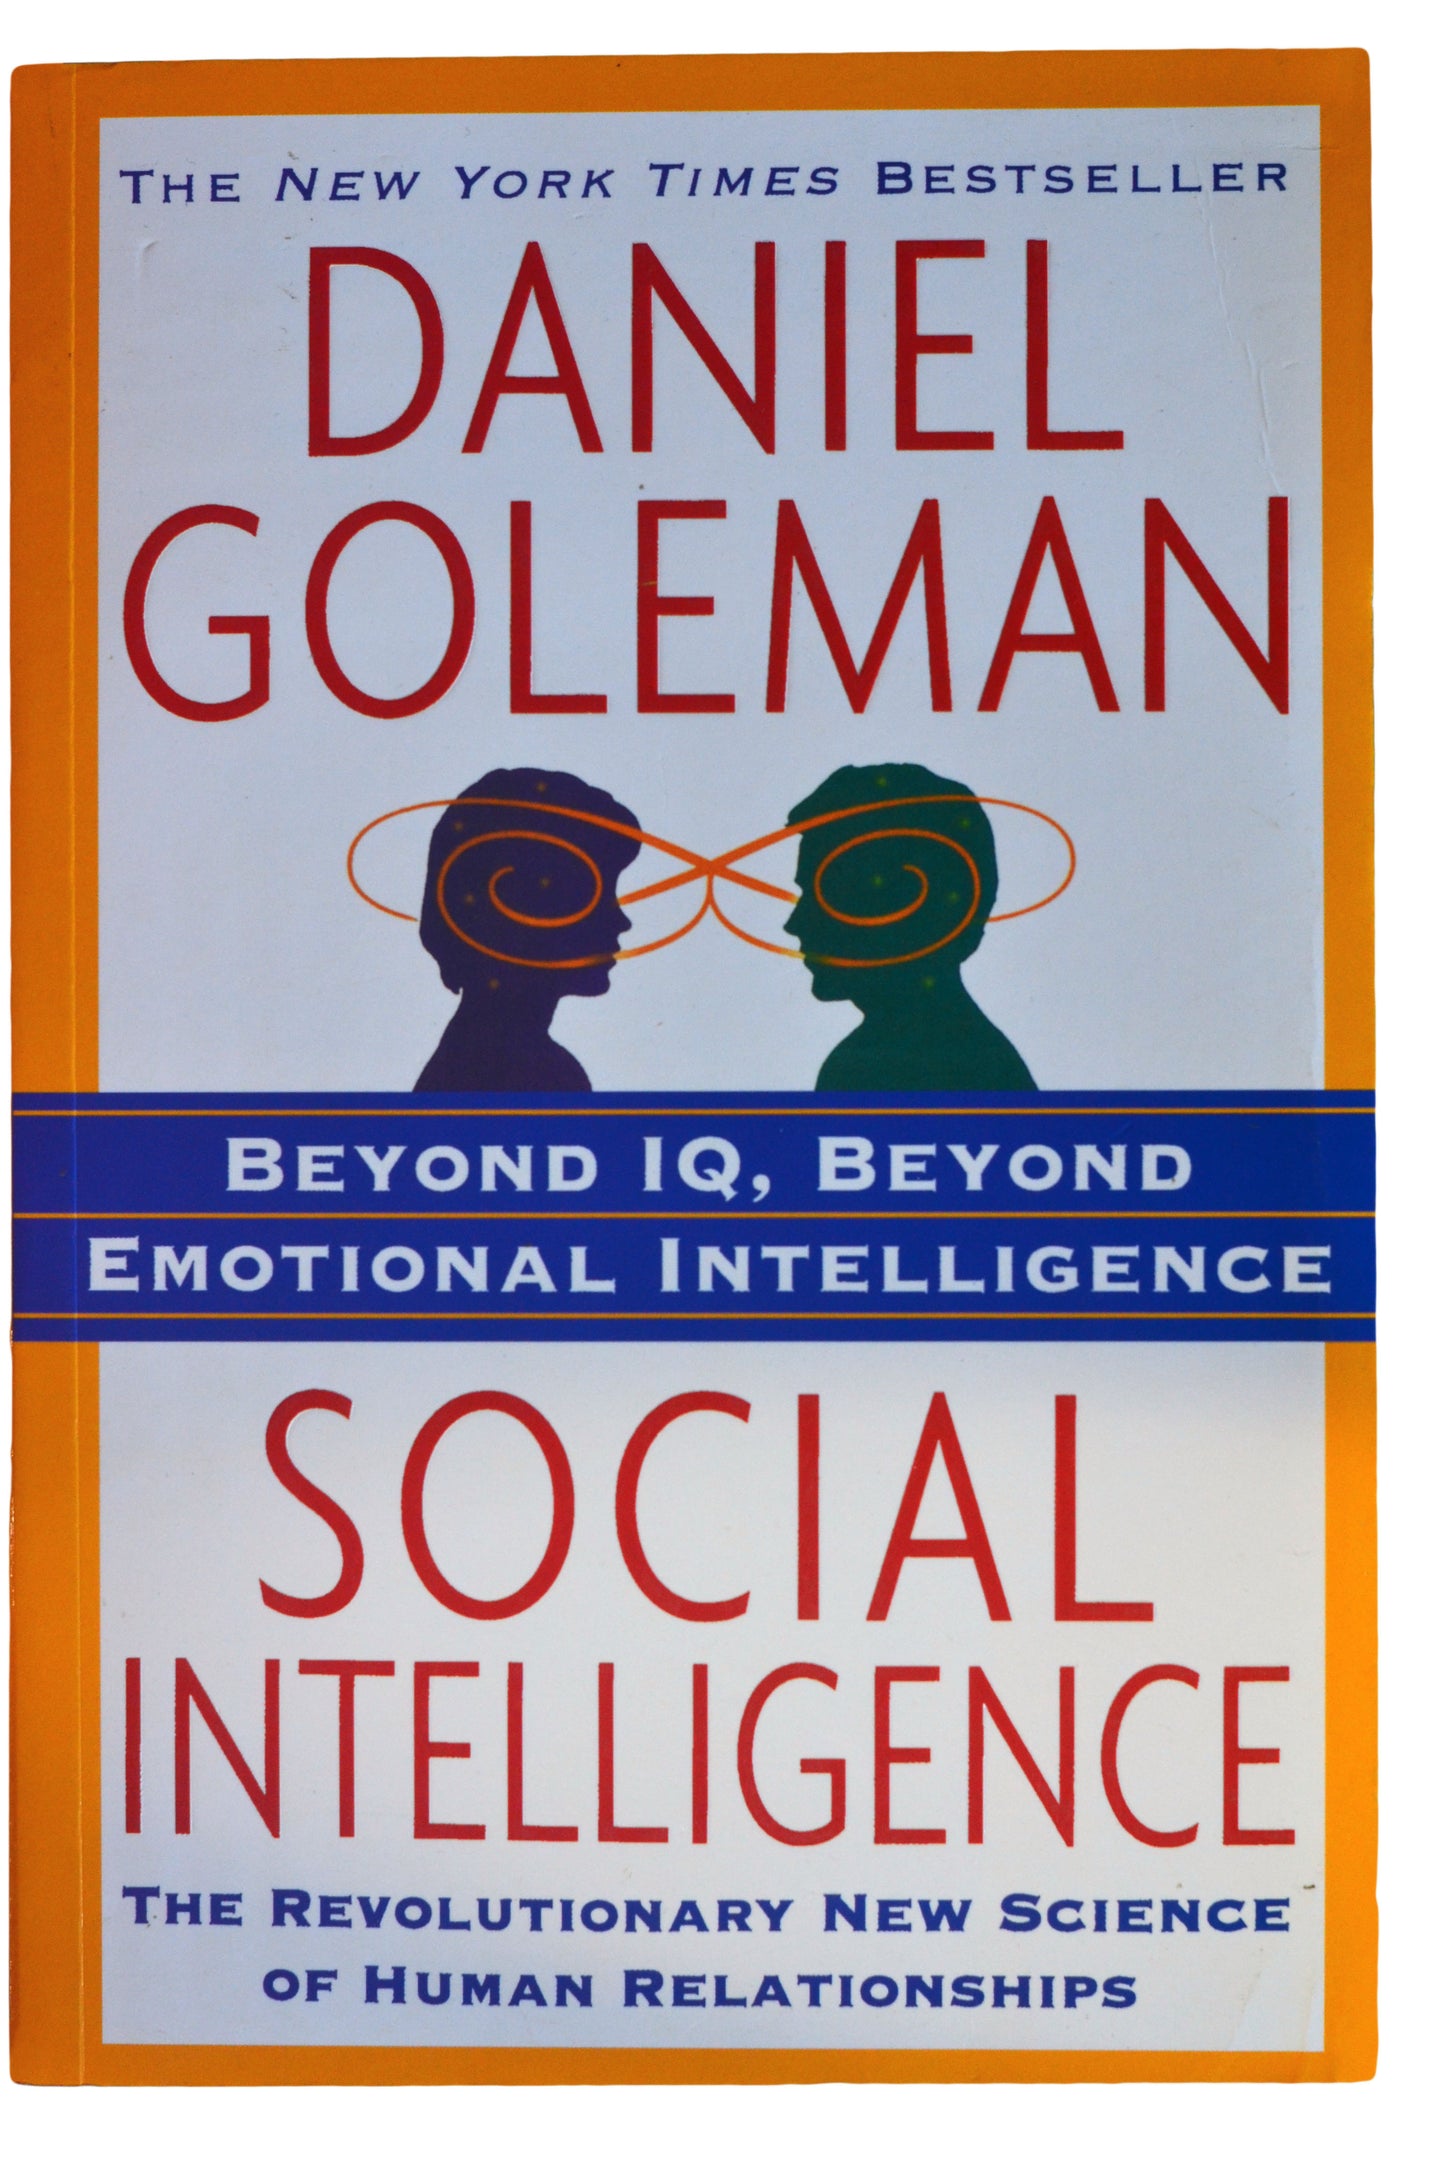 SOCIAL INTELLIGENCE by Daniel Goleman